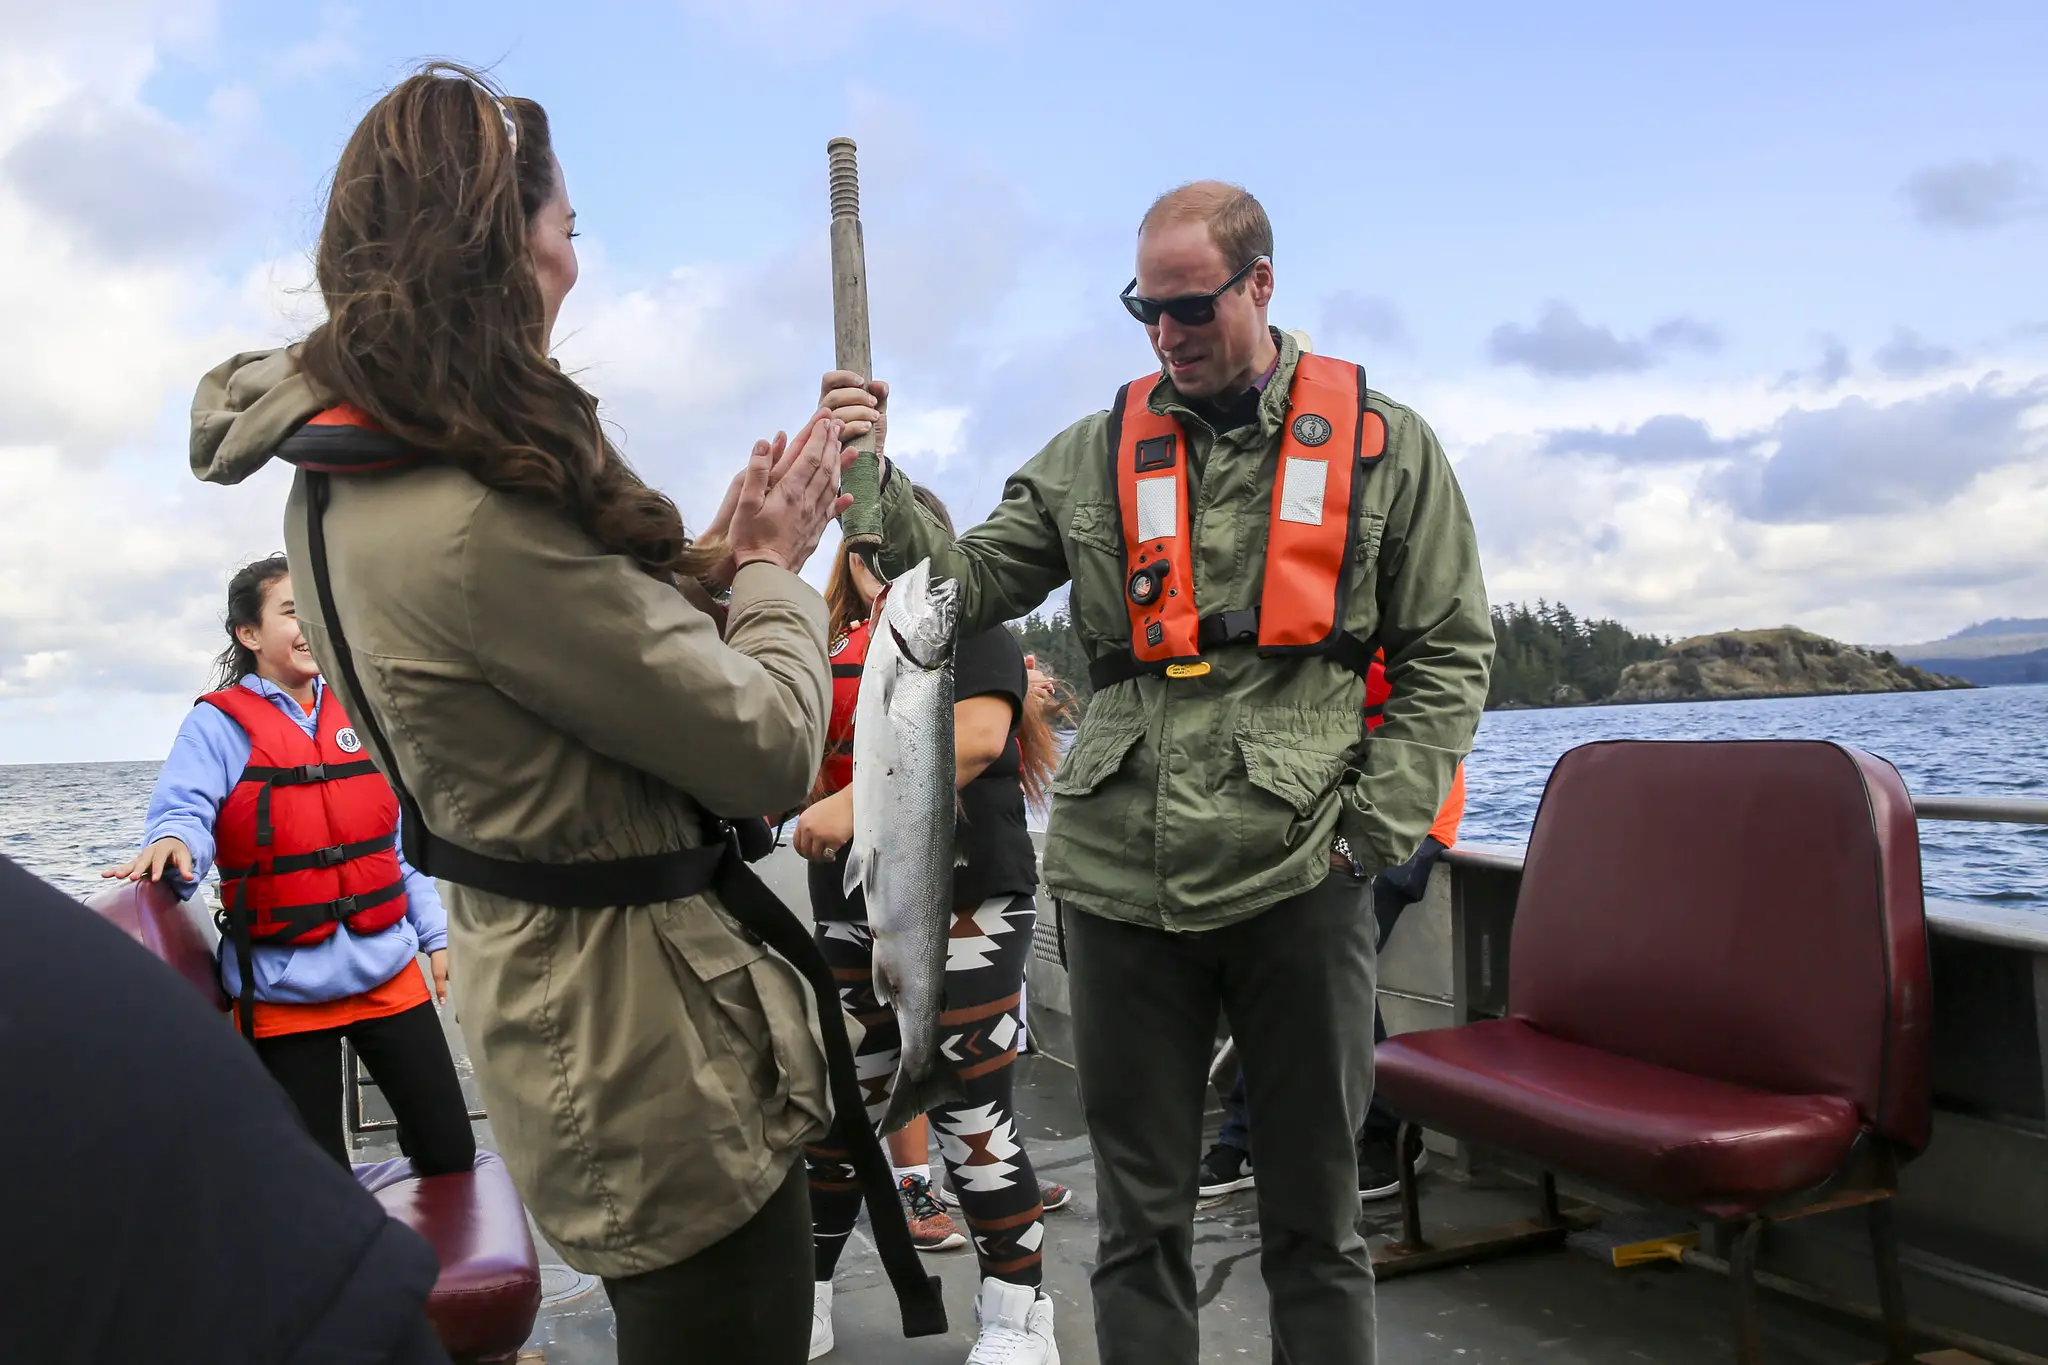 The Duke and Duchess of Cambridge went fishing in Haida Gwaii